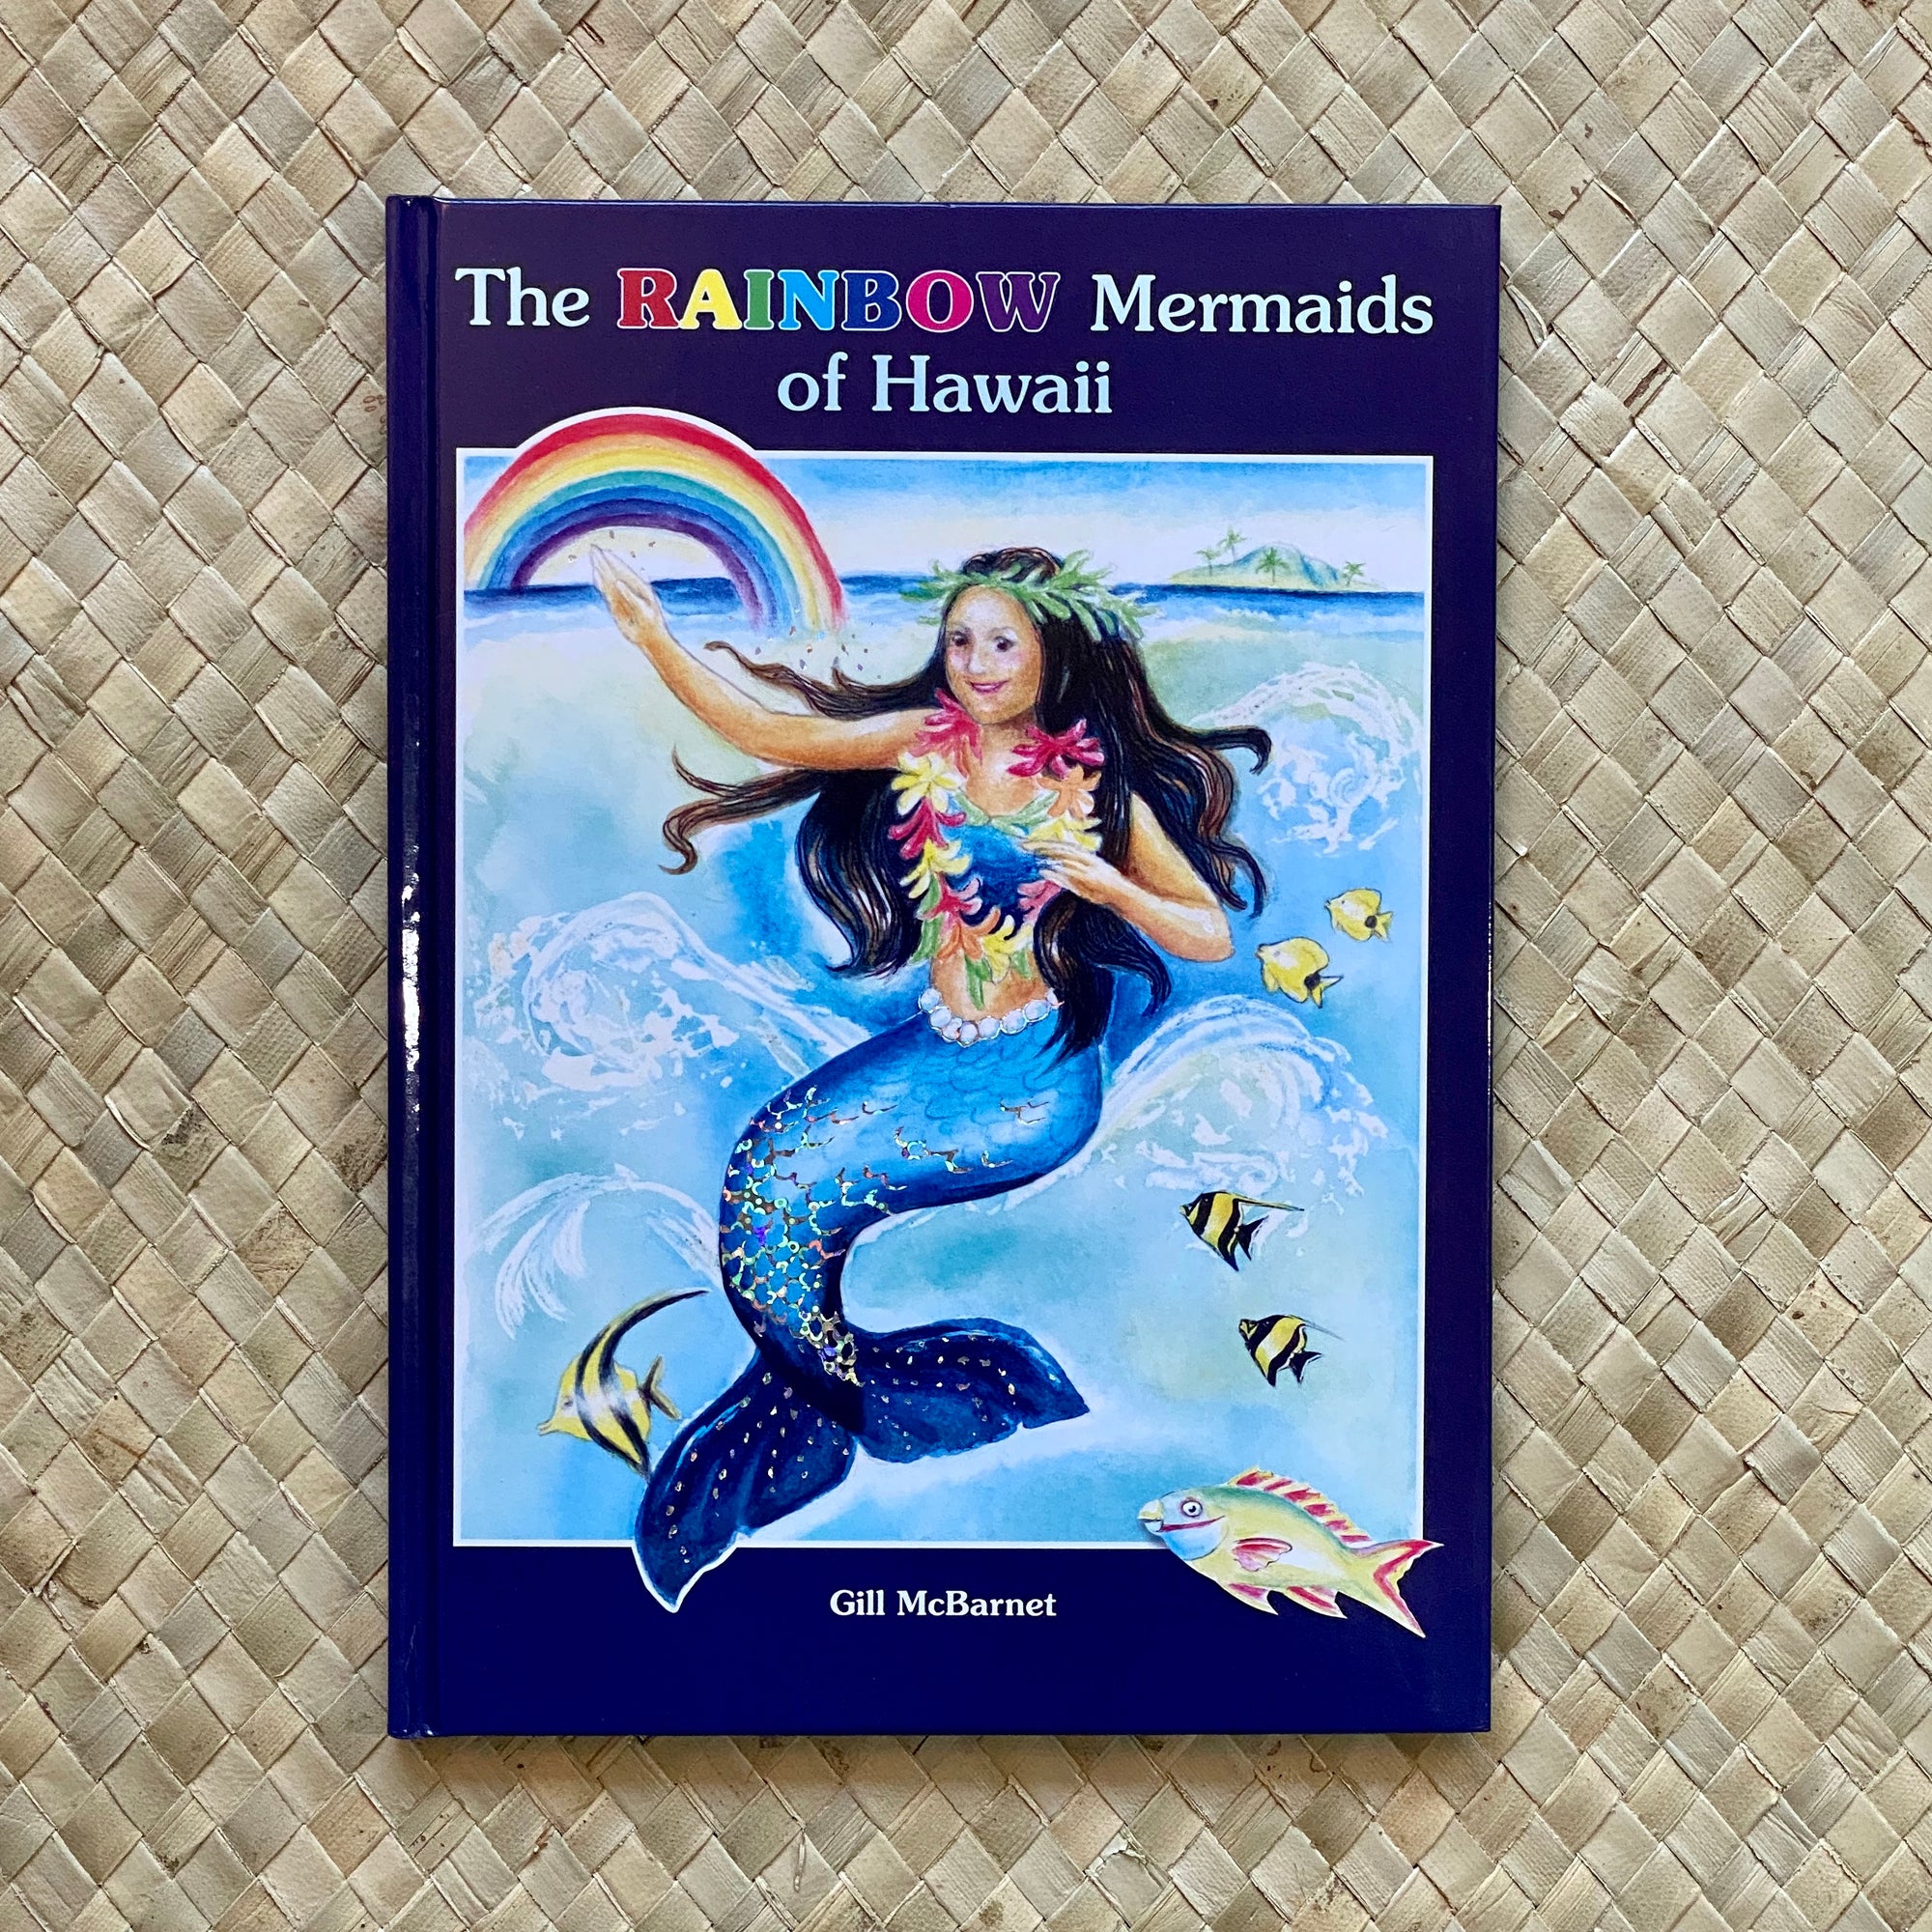 The Rainbow Mermaids of Hawaii